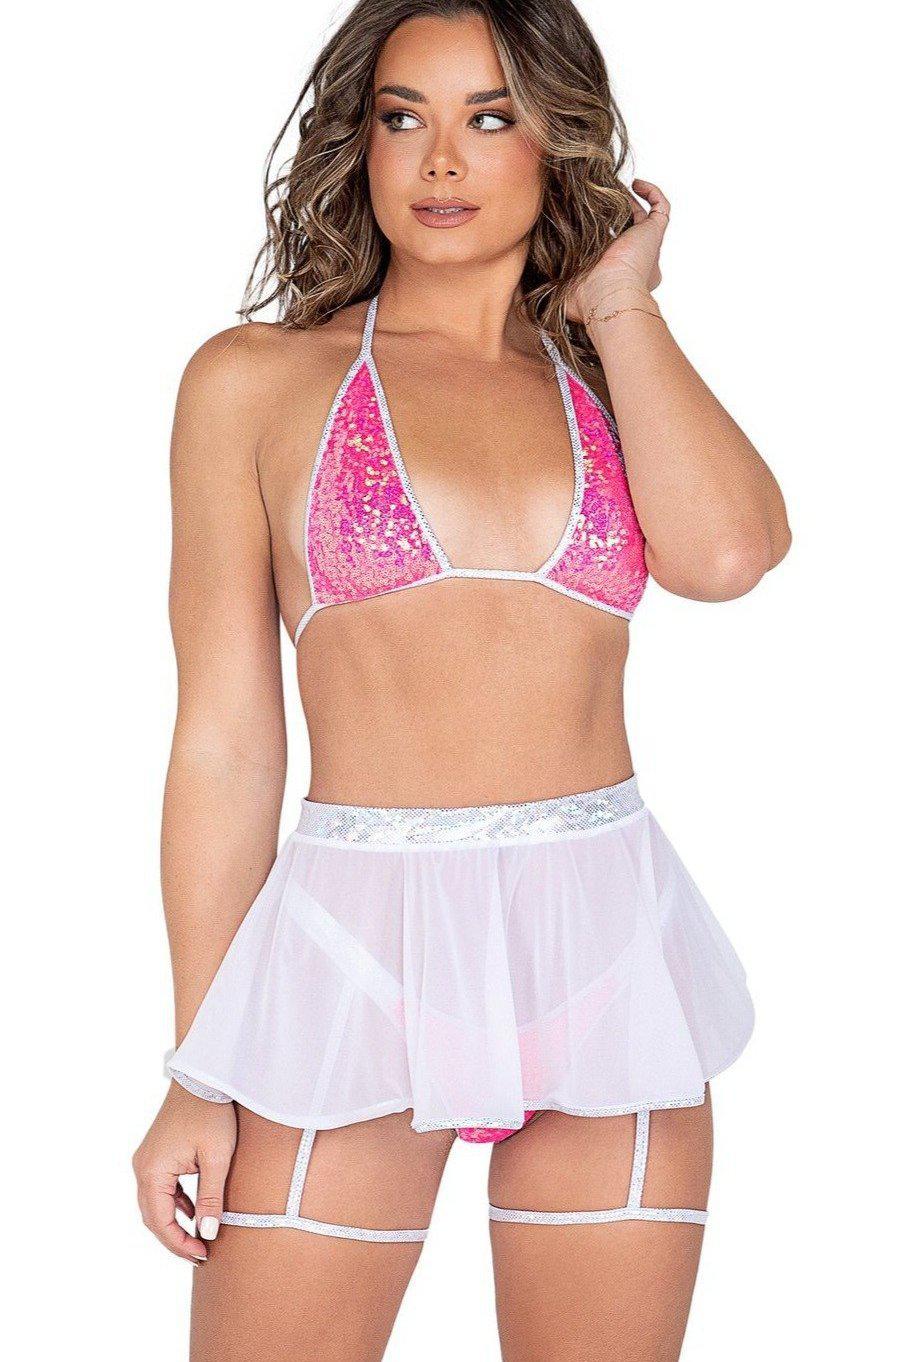 Sheer Mesh Skirt-Mini Skirts-Roma Dancewear-White-L/XL-SEXYSHOES.COM